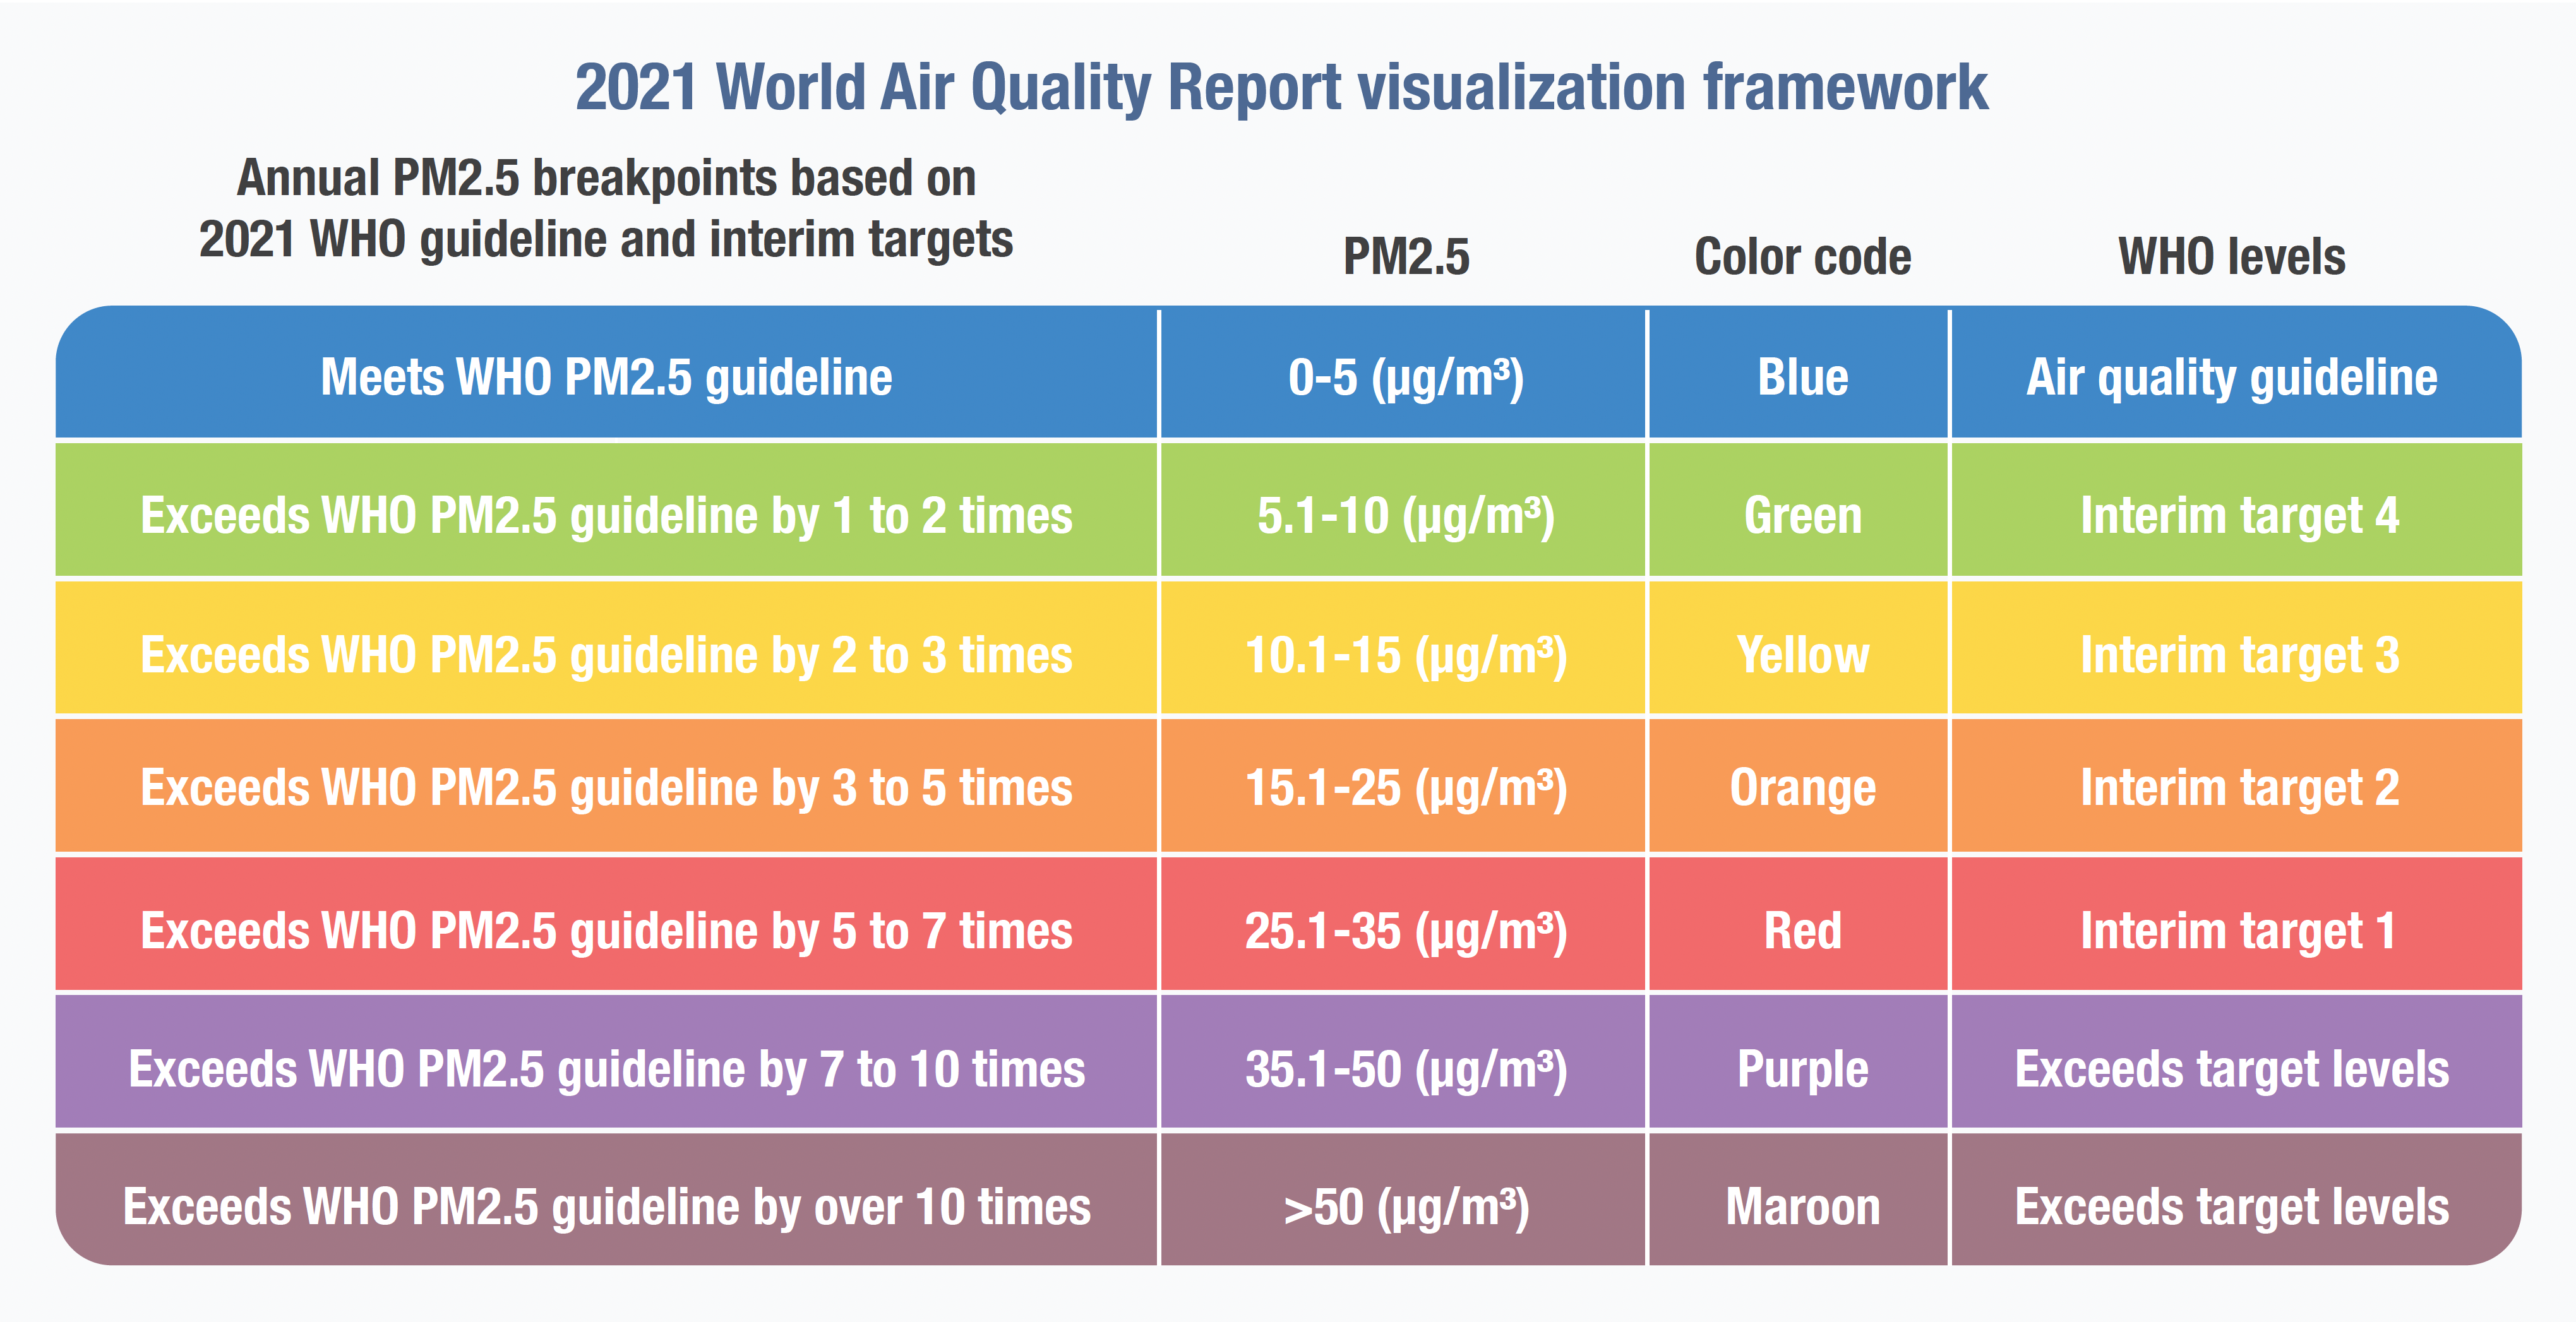 2021 WAQR visualization framework